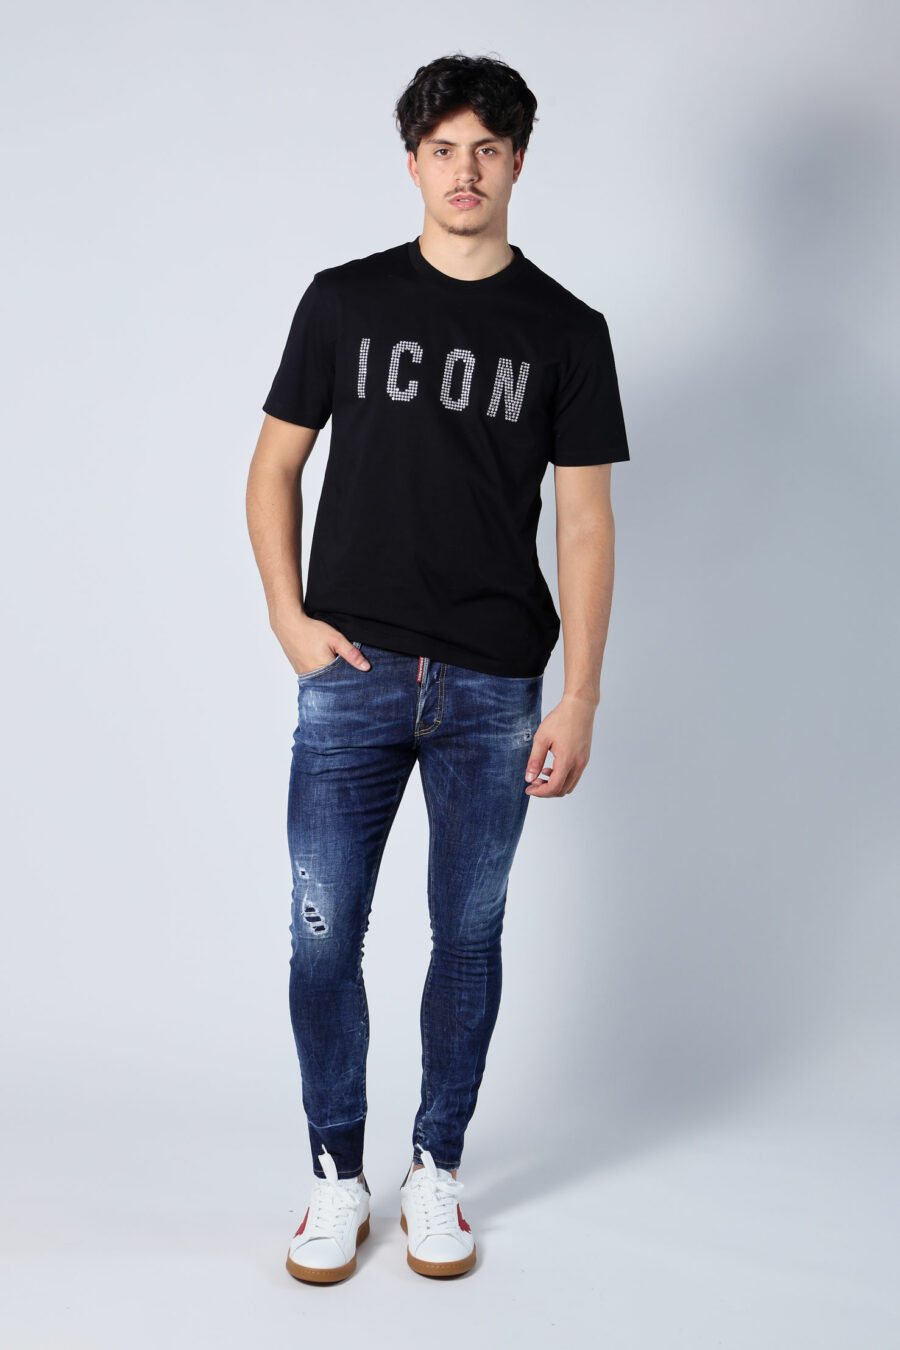 T-shirt preta com logótipo "icon" axadrezado branco - Untitled Catalog 05672